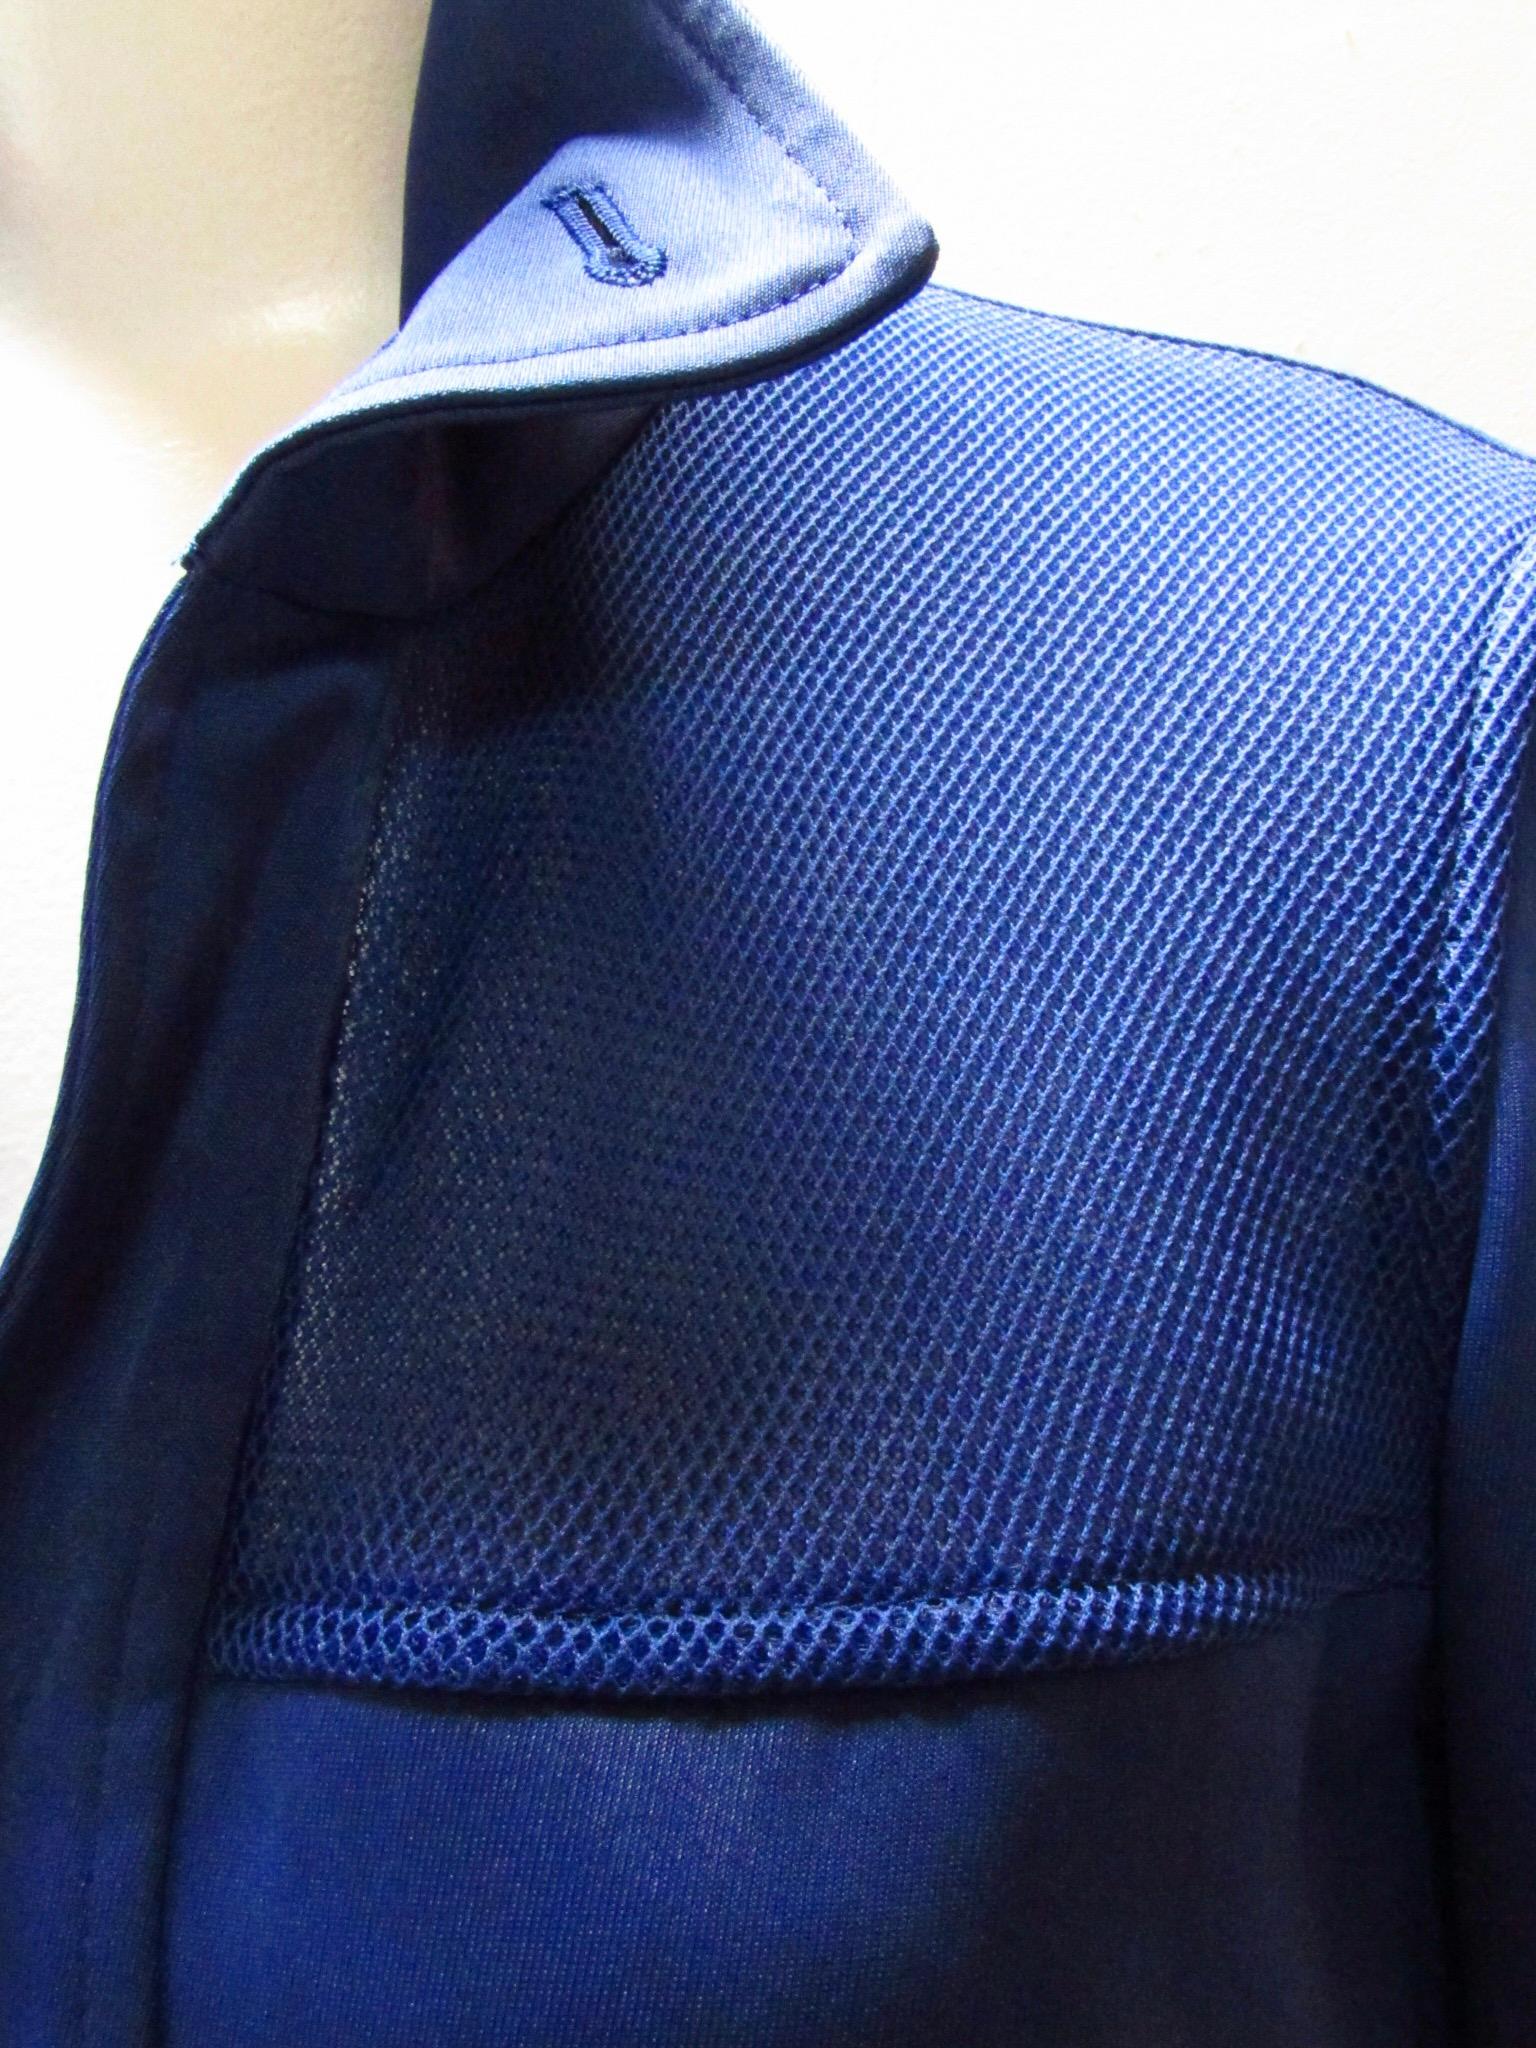 Women's 1980's Matsuda Cobalt Blue Fitted Moto Jacket For Sale